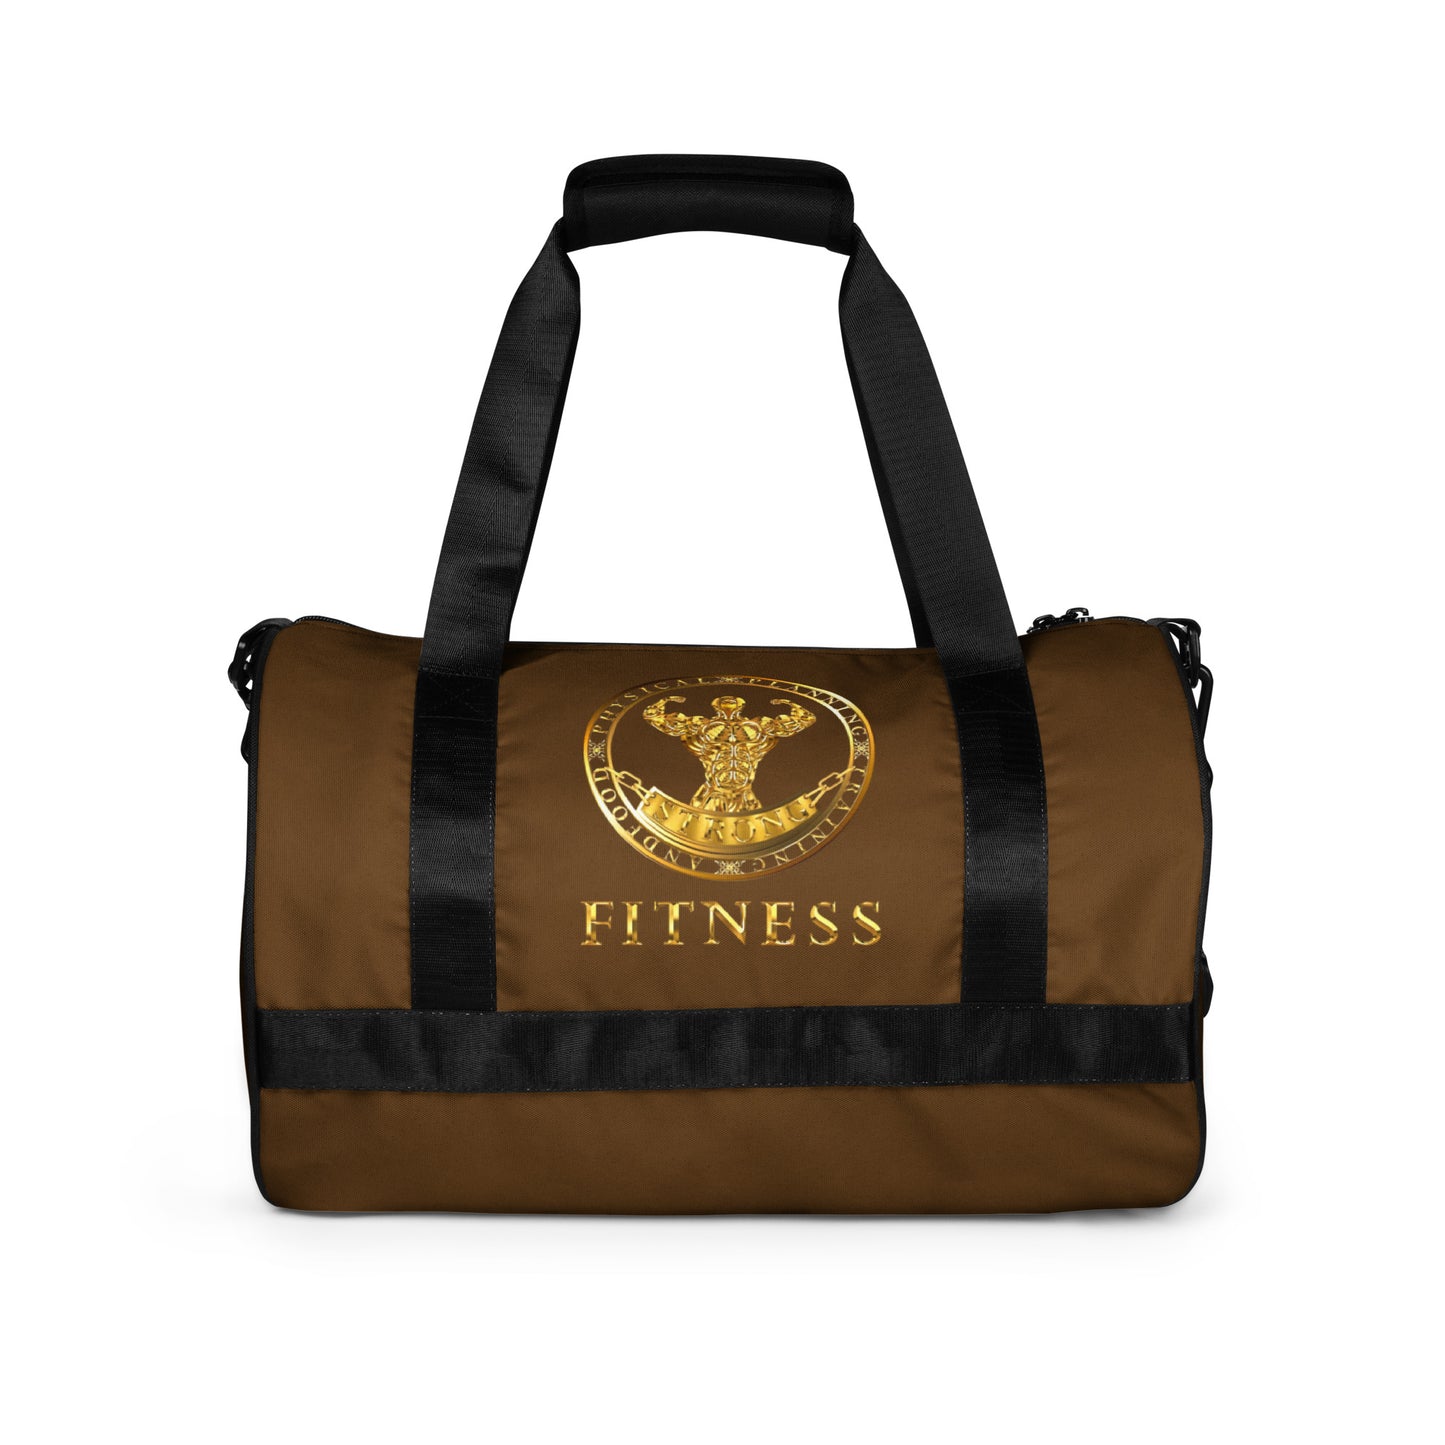 All-over print gym bag,Strong Fitness